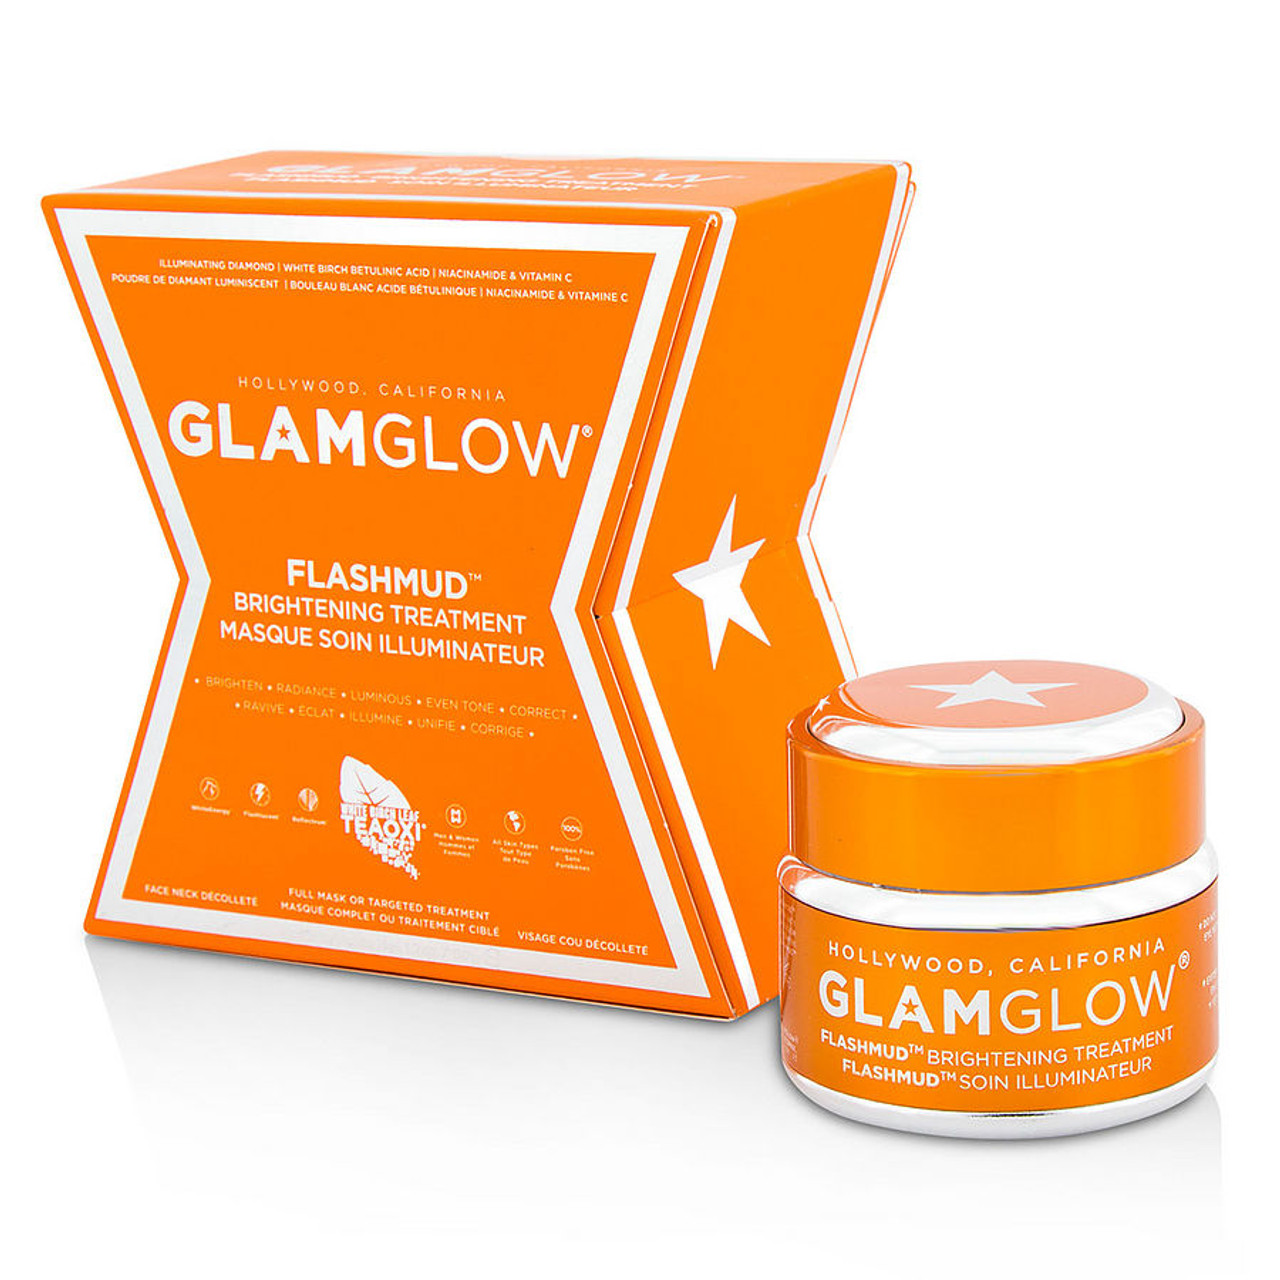 GlamGlow Flashmud Brightening Treatment  - 1.7oz (50g)